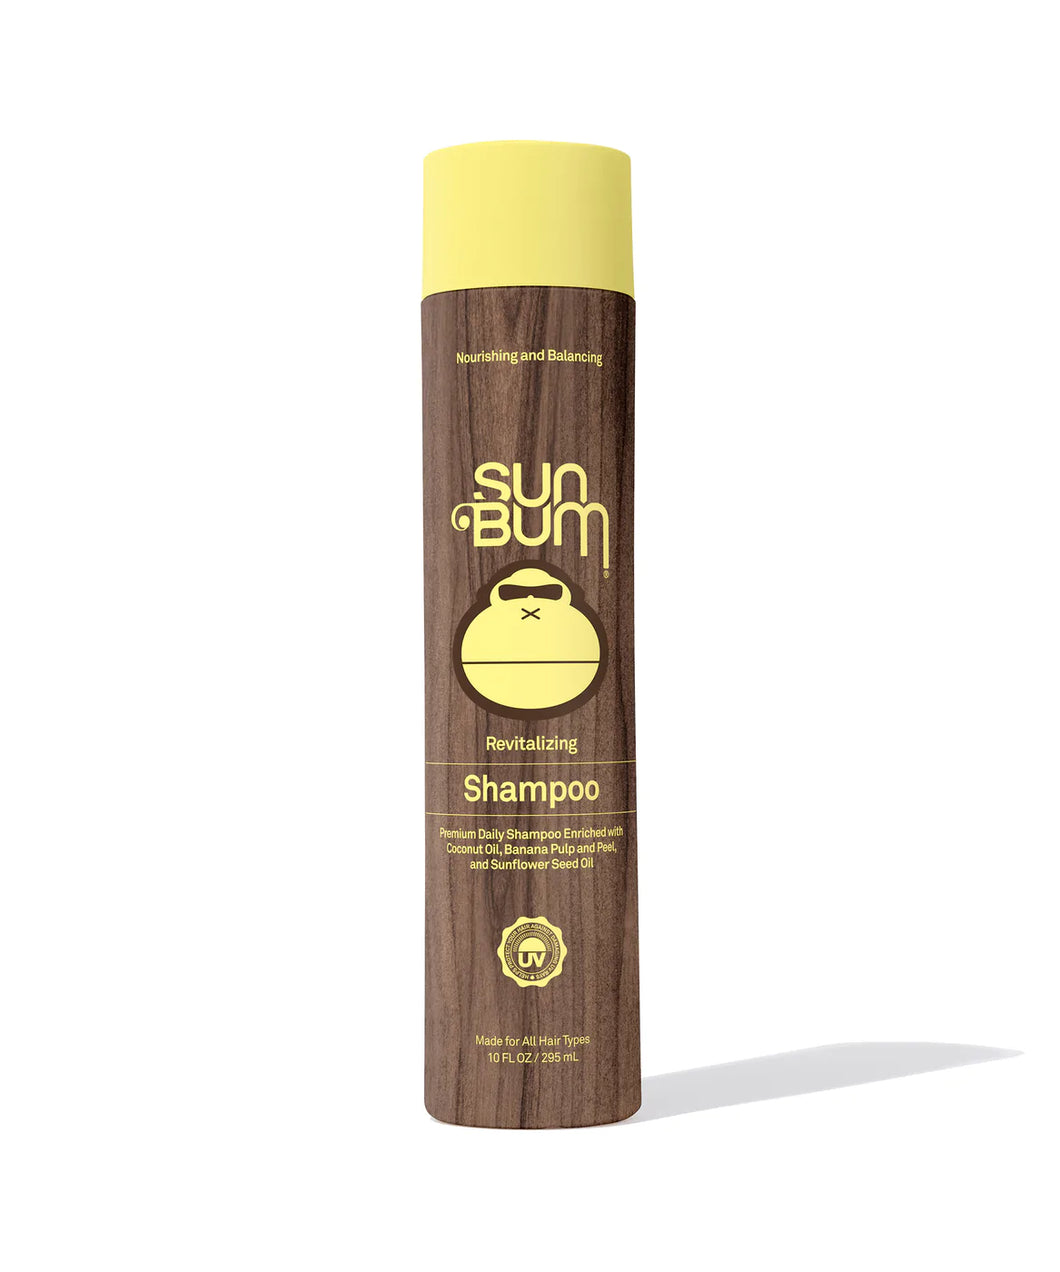 Sun Bum: Revitalizing Shampoo